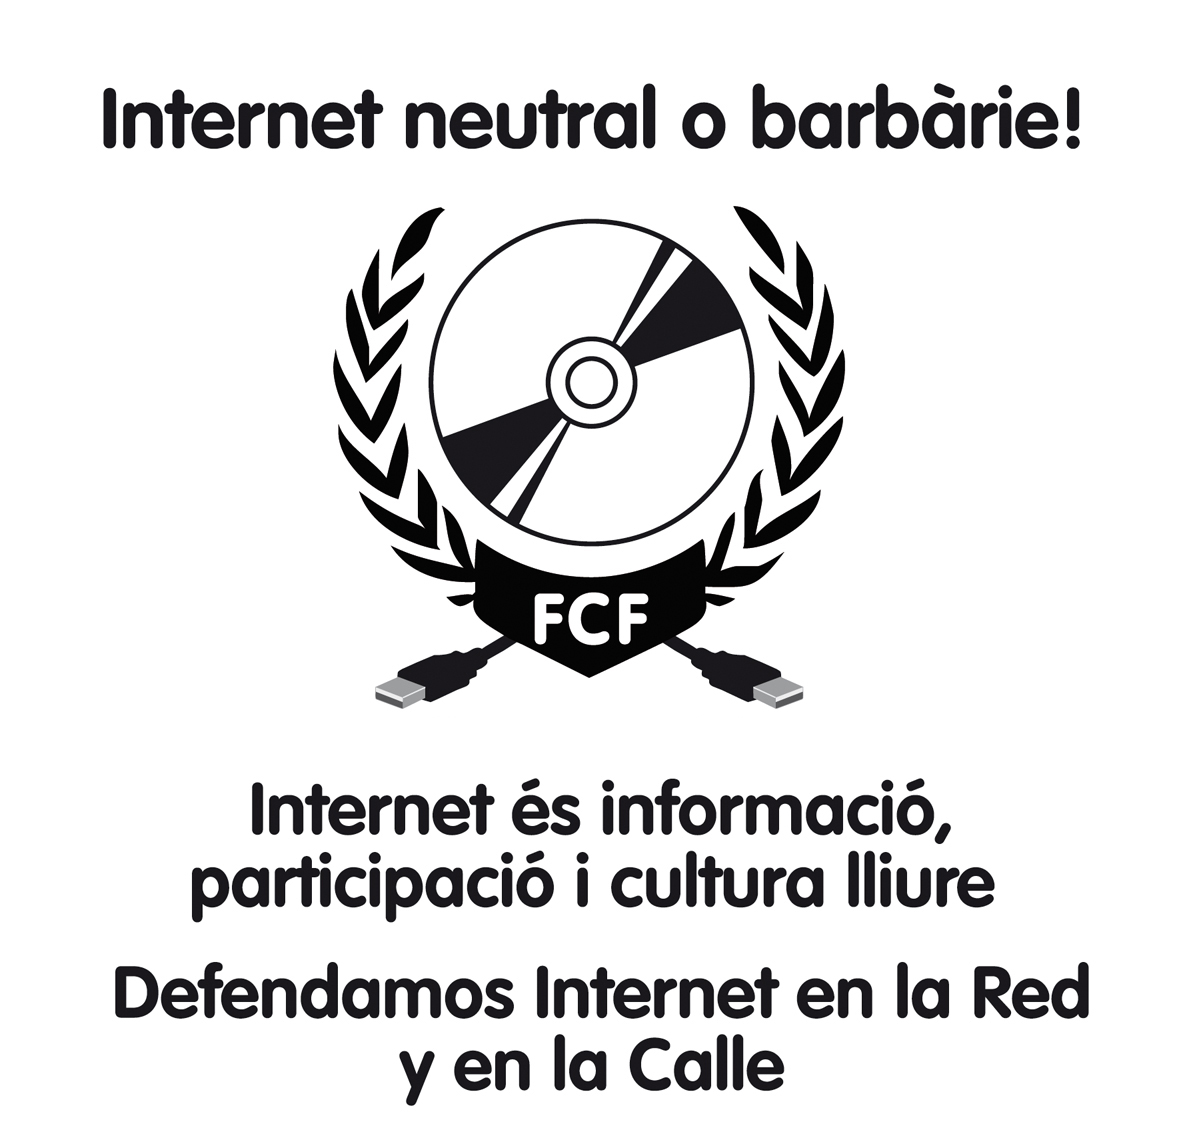 FCForum Internet neutral o barbarie